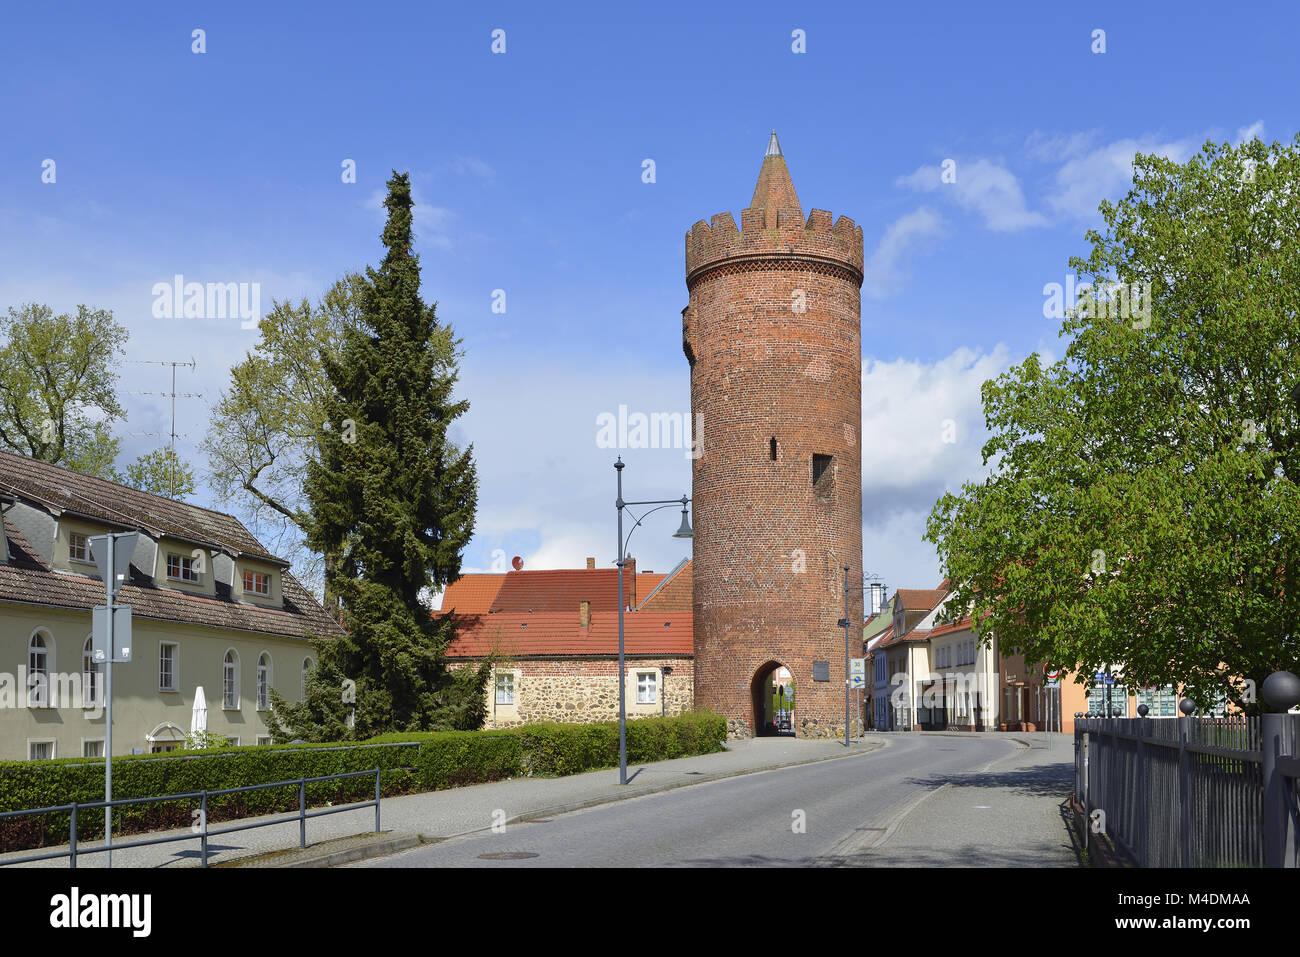 Luckauer gate tower Stock Photo